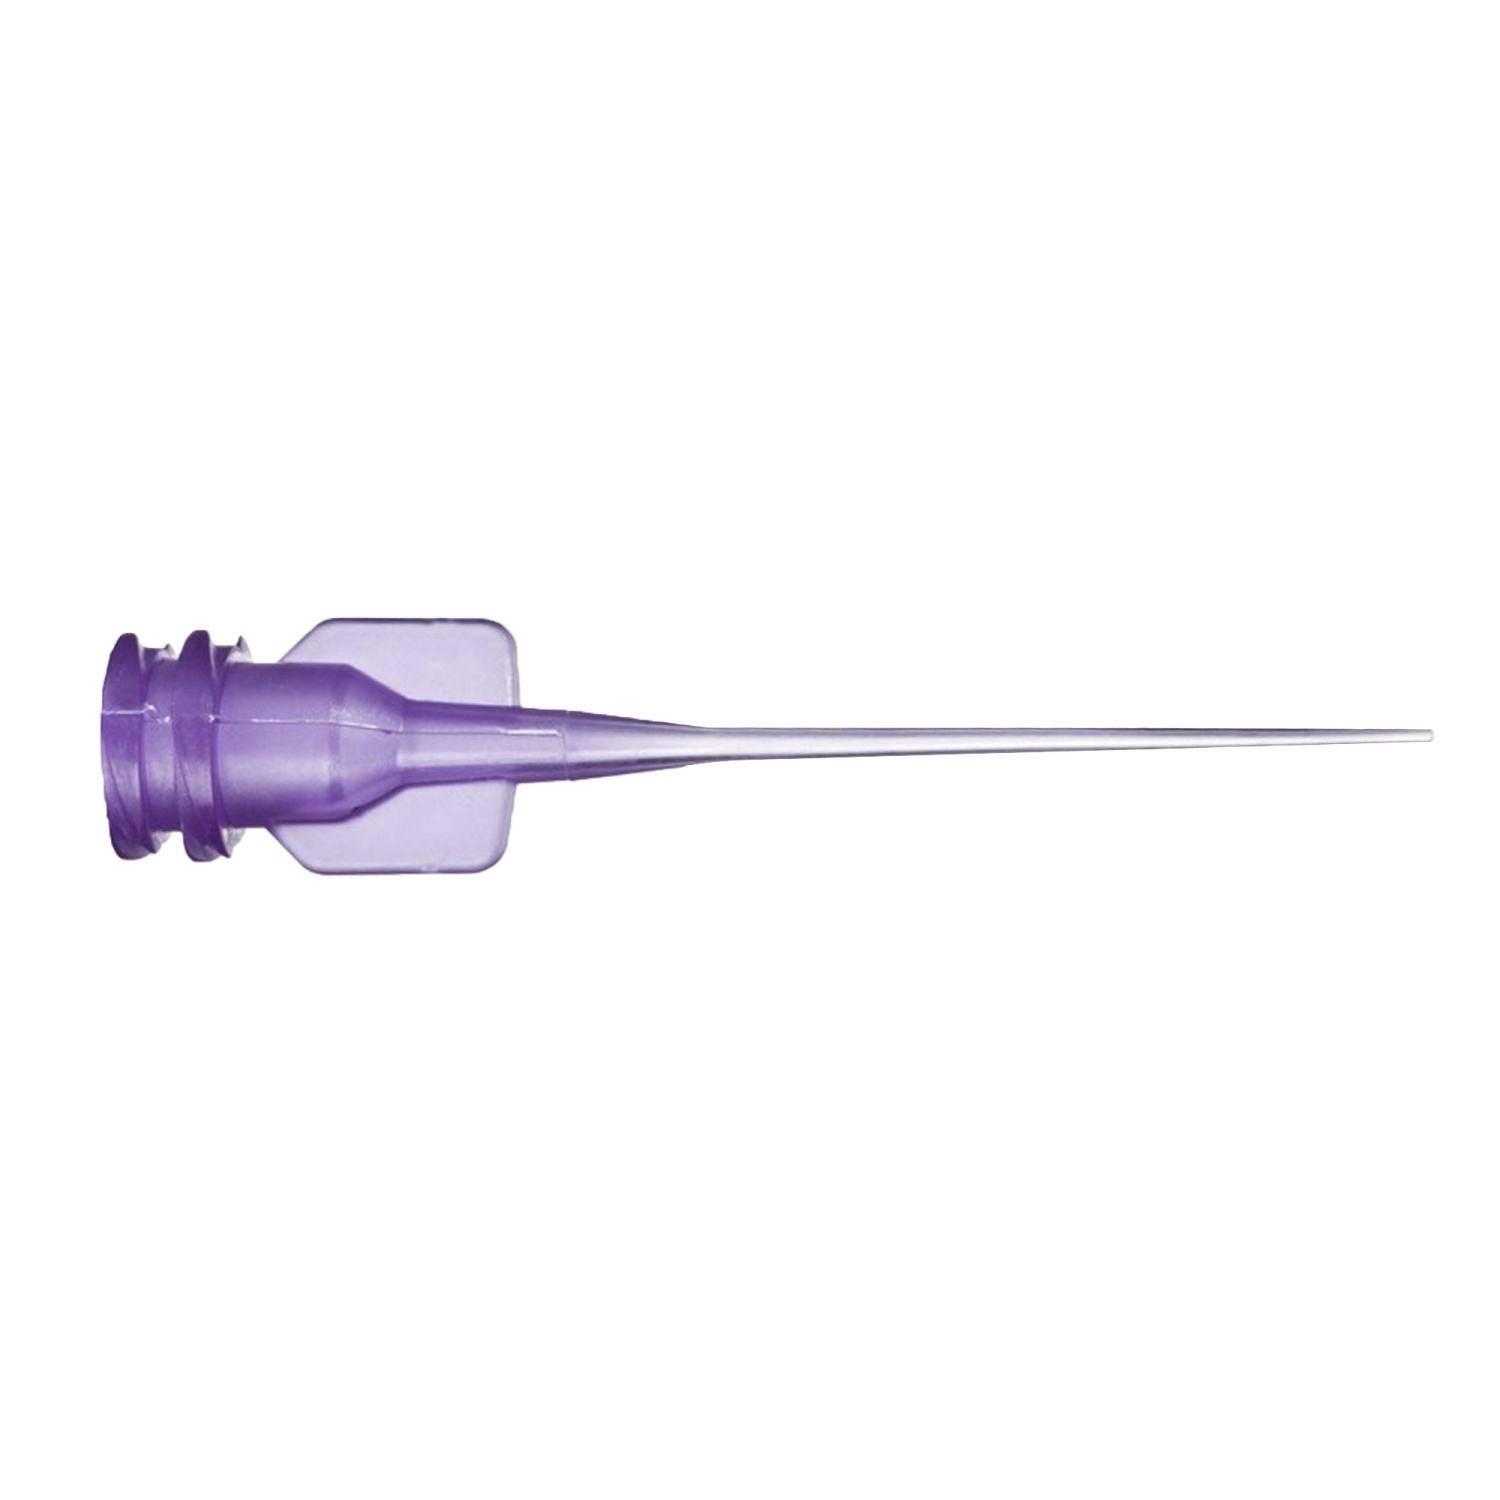 Capillary Tips (фиолетовые) - 20 шт/упак UL341